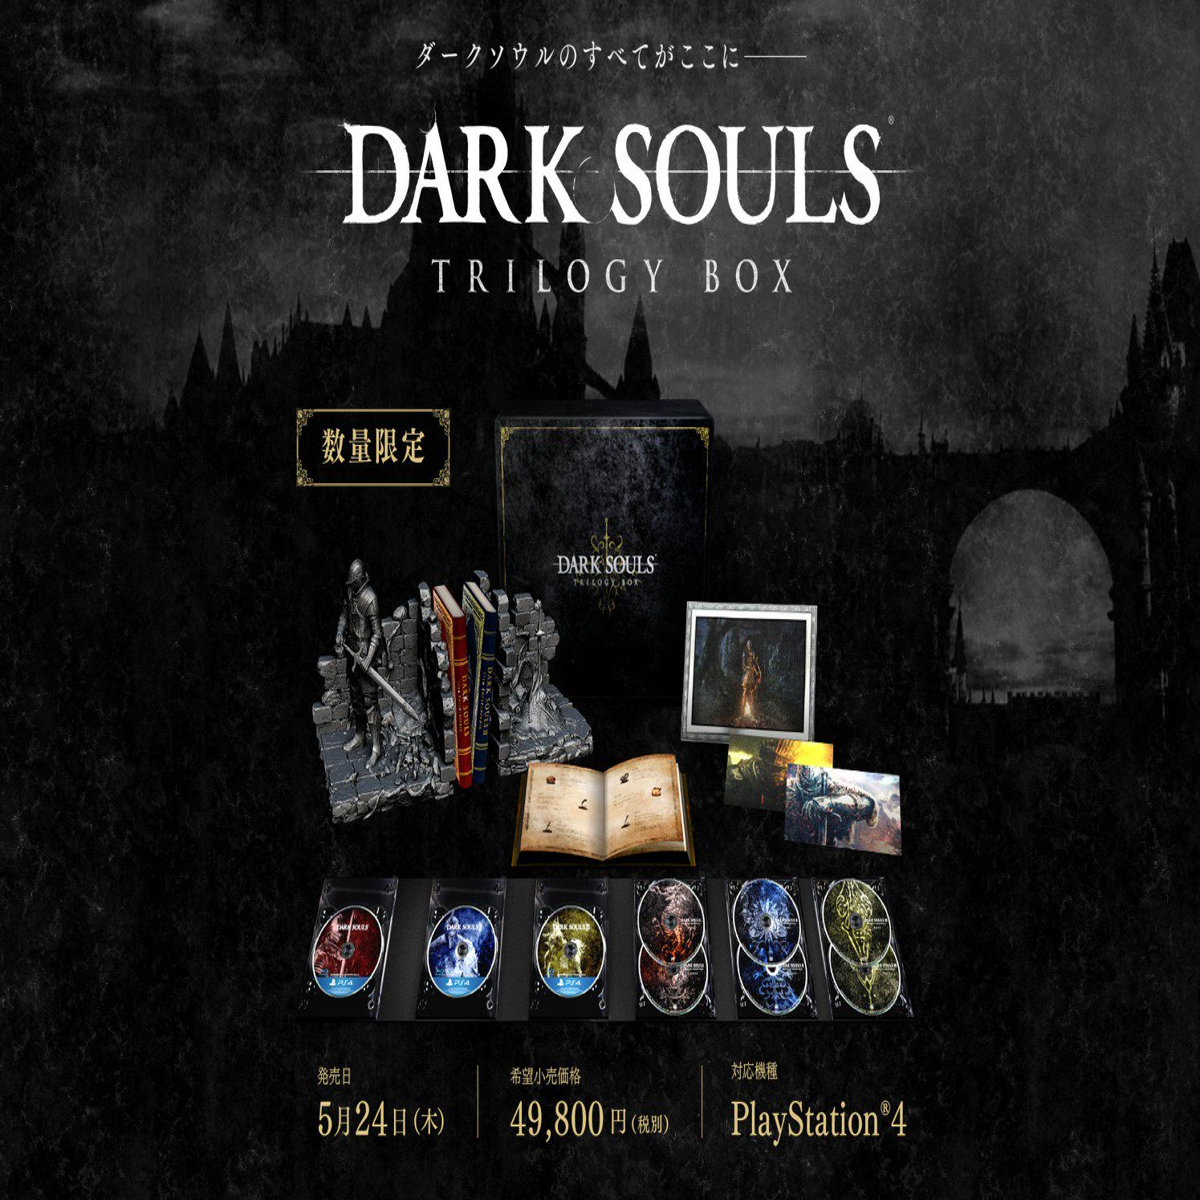 Hjemland Hare fætter This Dark Souls Trilogy Box Set announced for Japan is rather cool | VG247